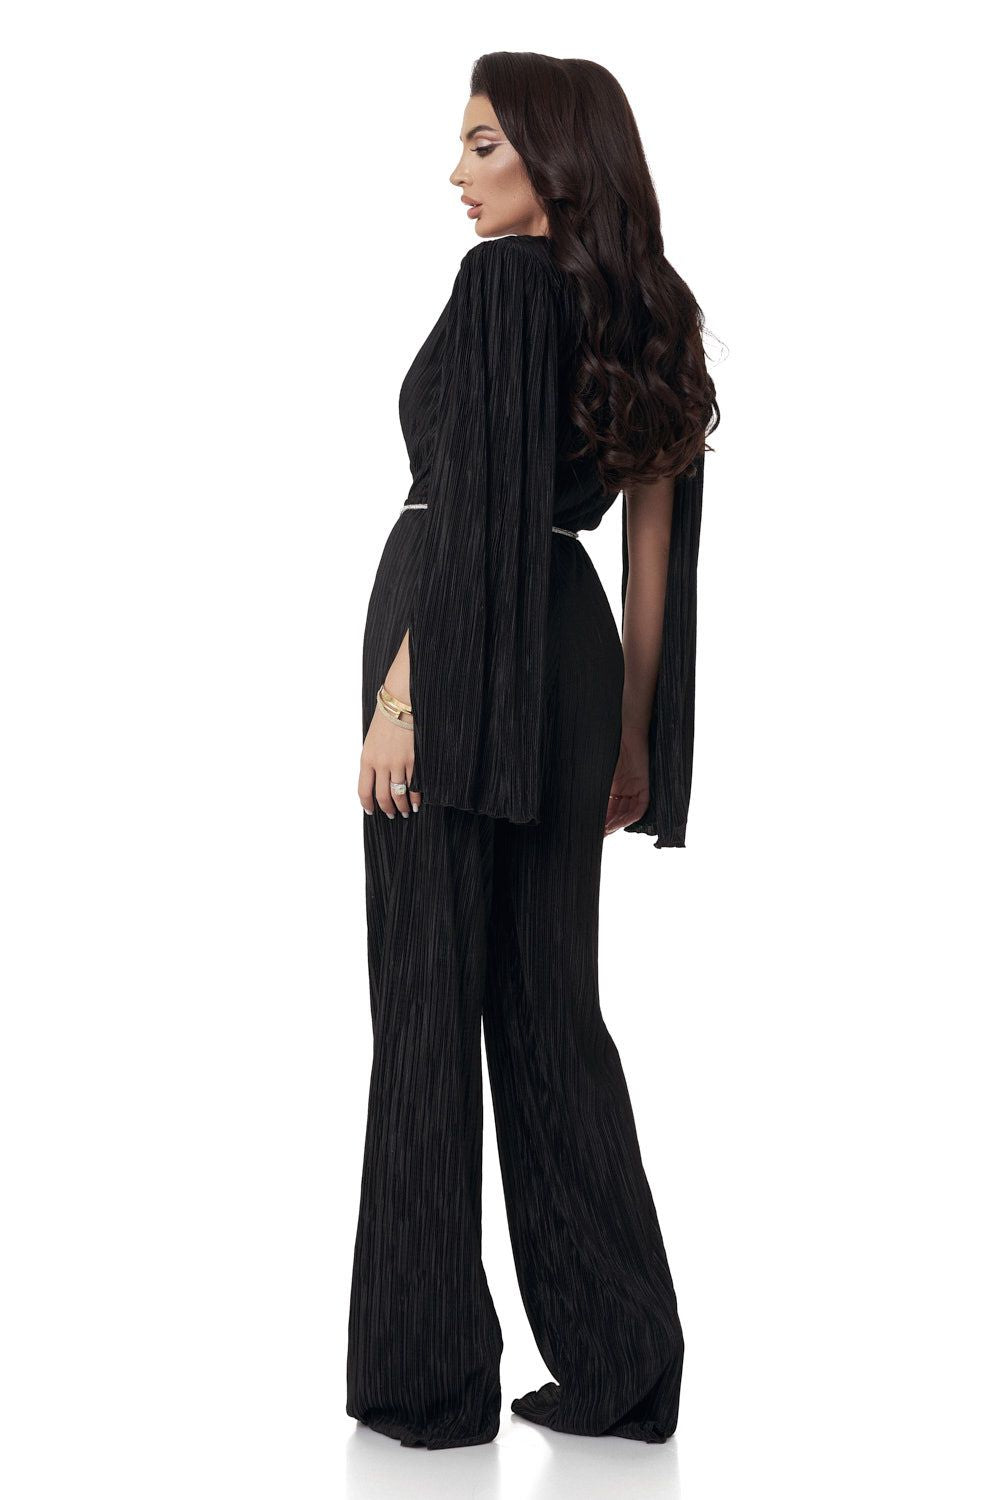 Elegant black jumpsuit for women, Jovana Bogas